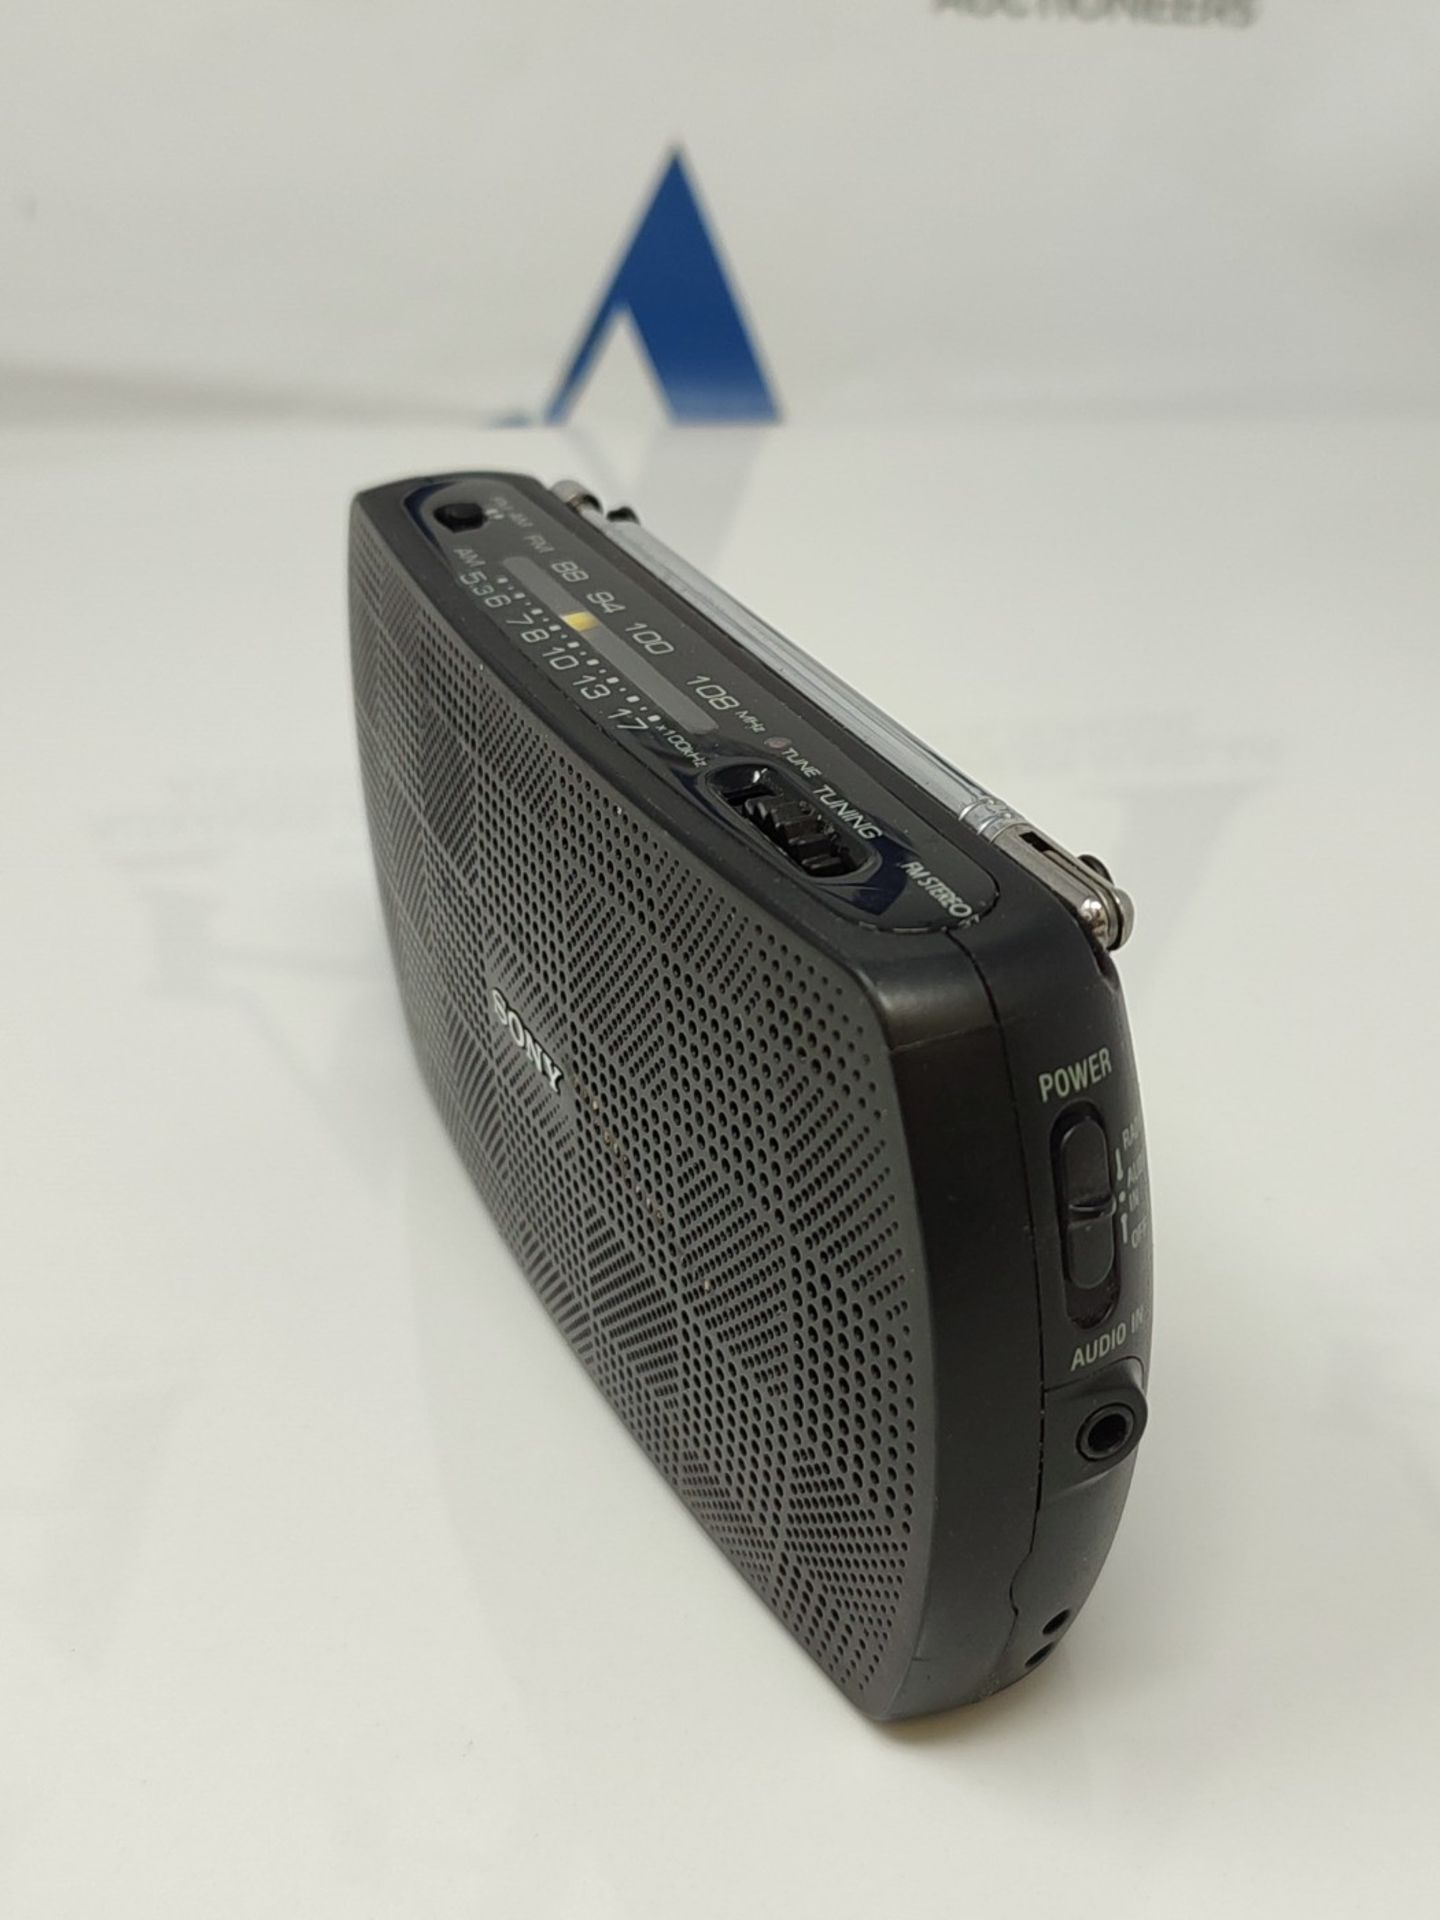 Sony SRF-18 AM/FM Portable Radio - Black - Bild 2 aus 2